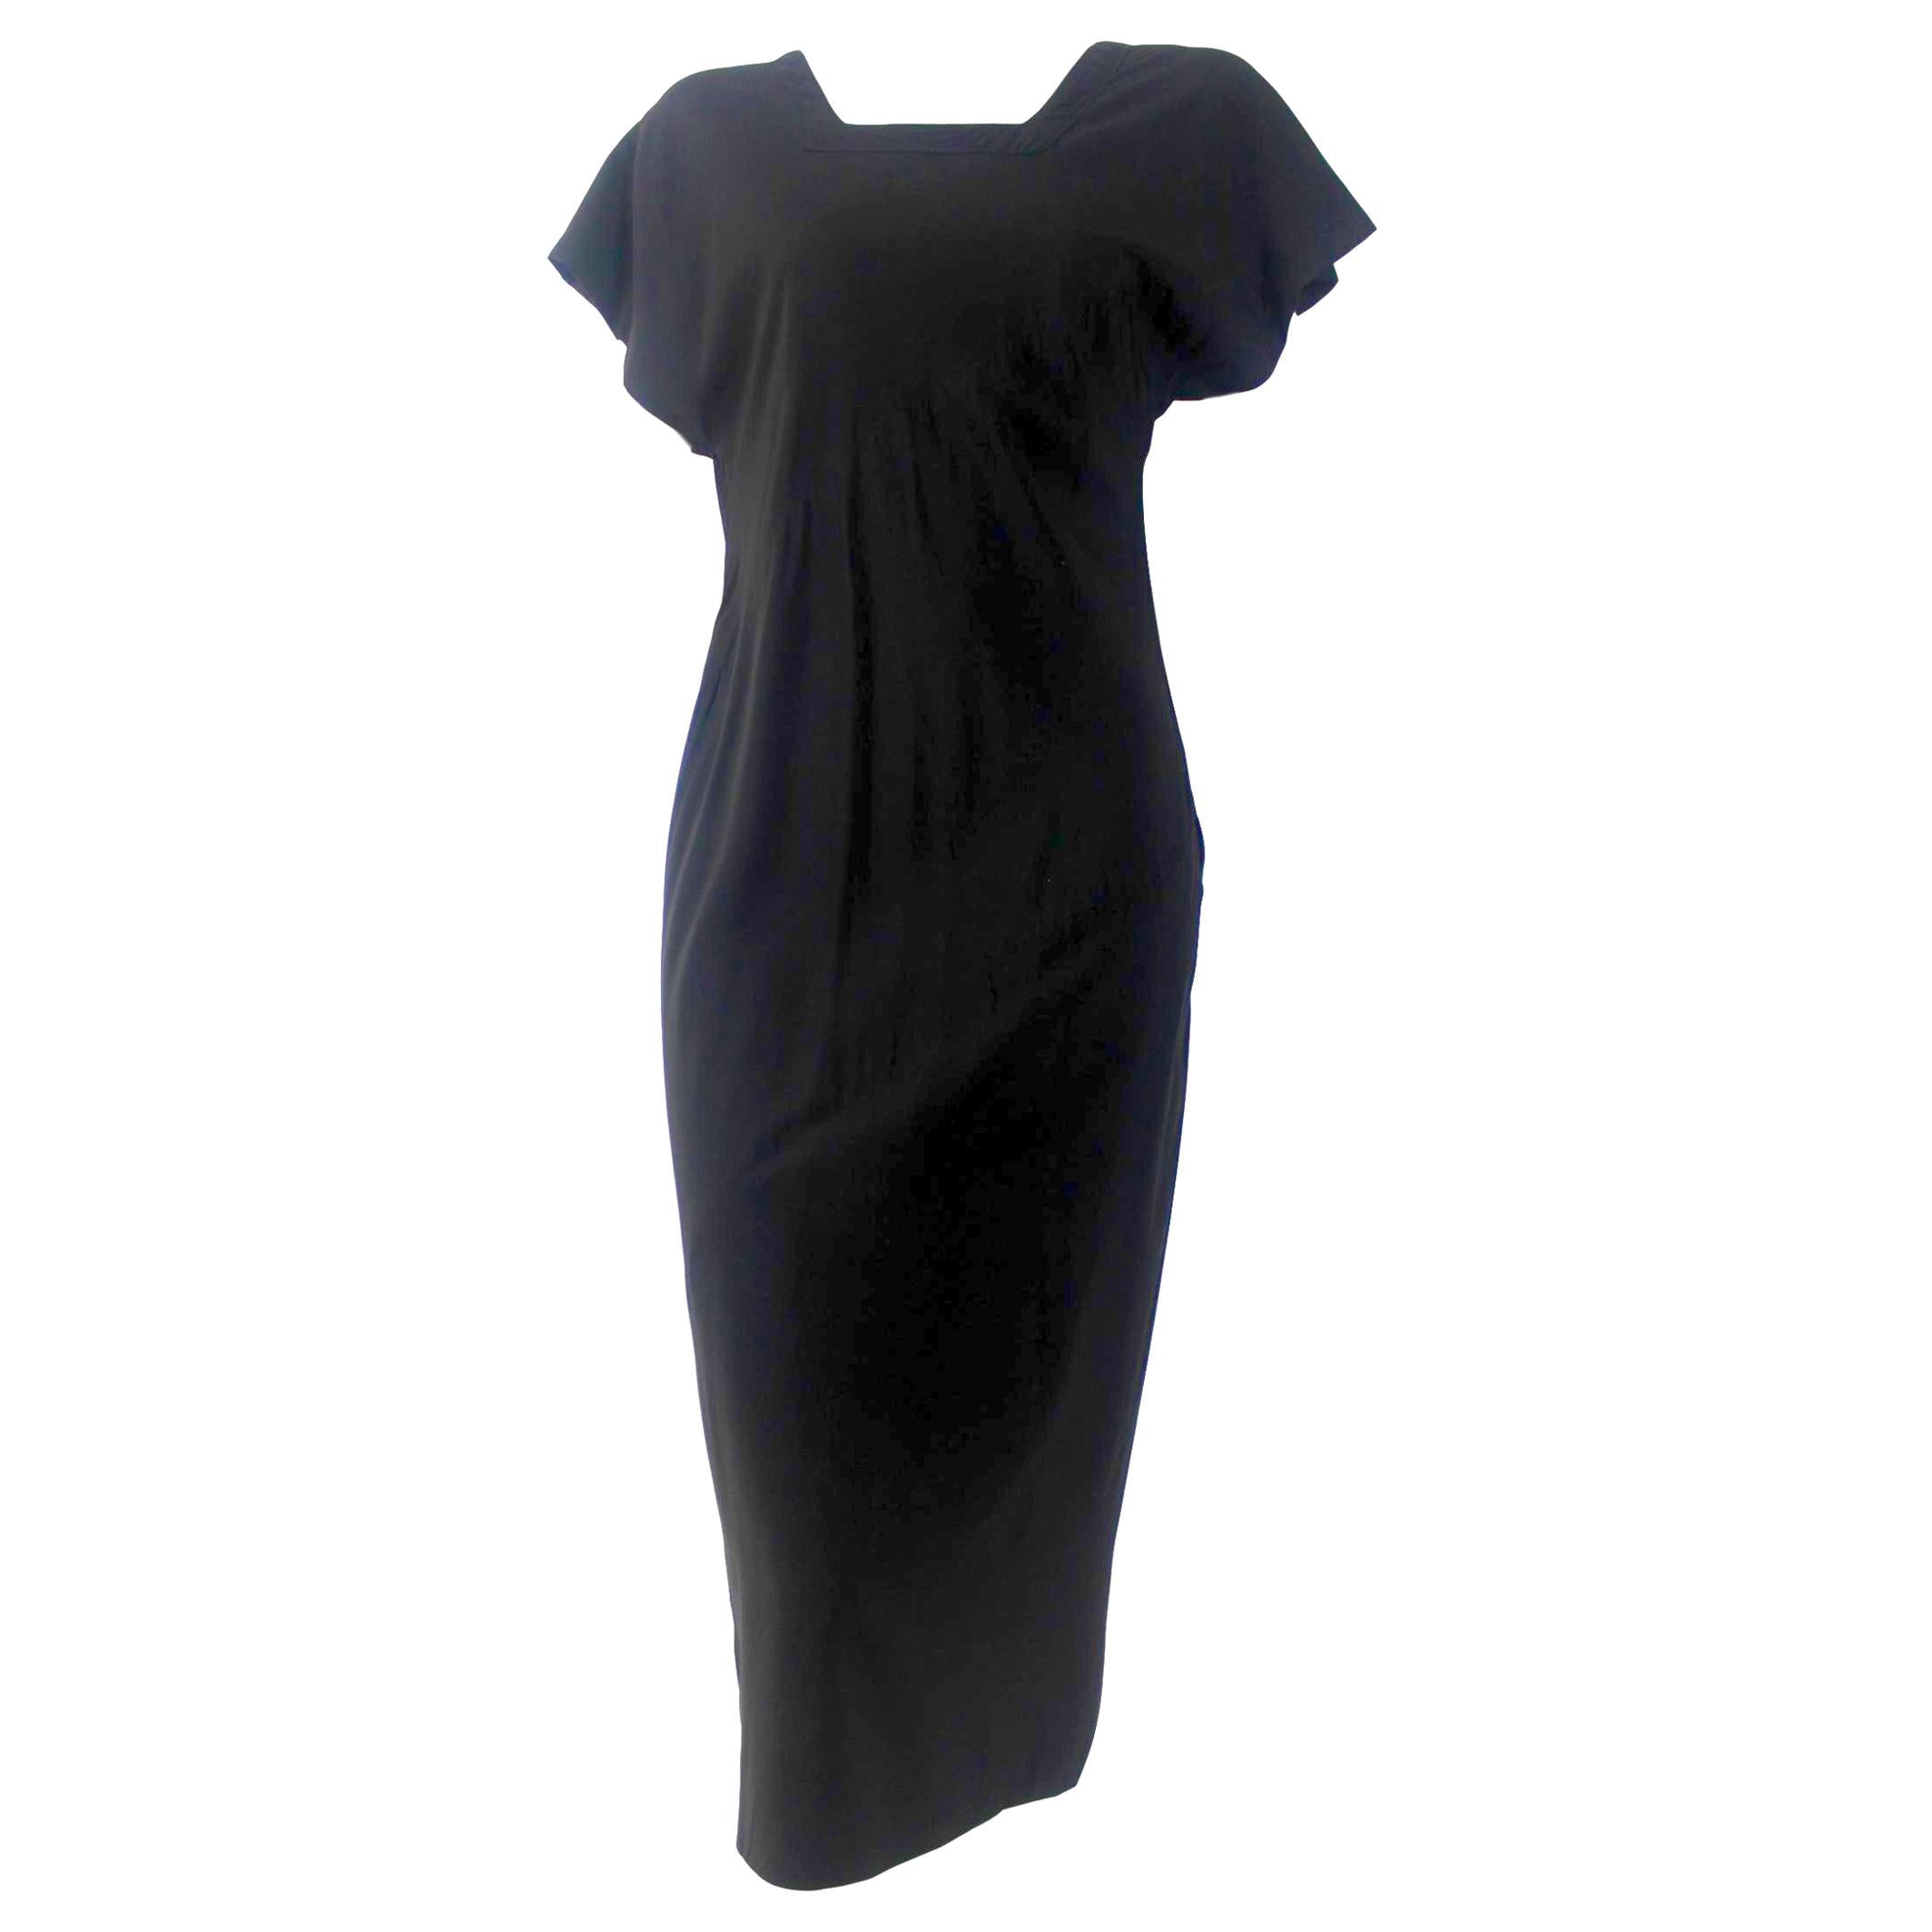 John Galliano Black Bias Cut Silk Dress Made in England Label For Sale